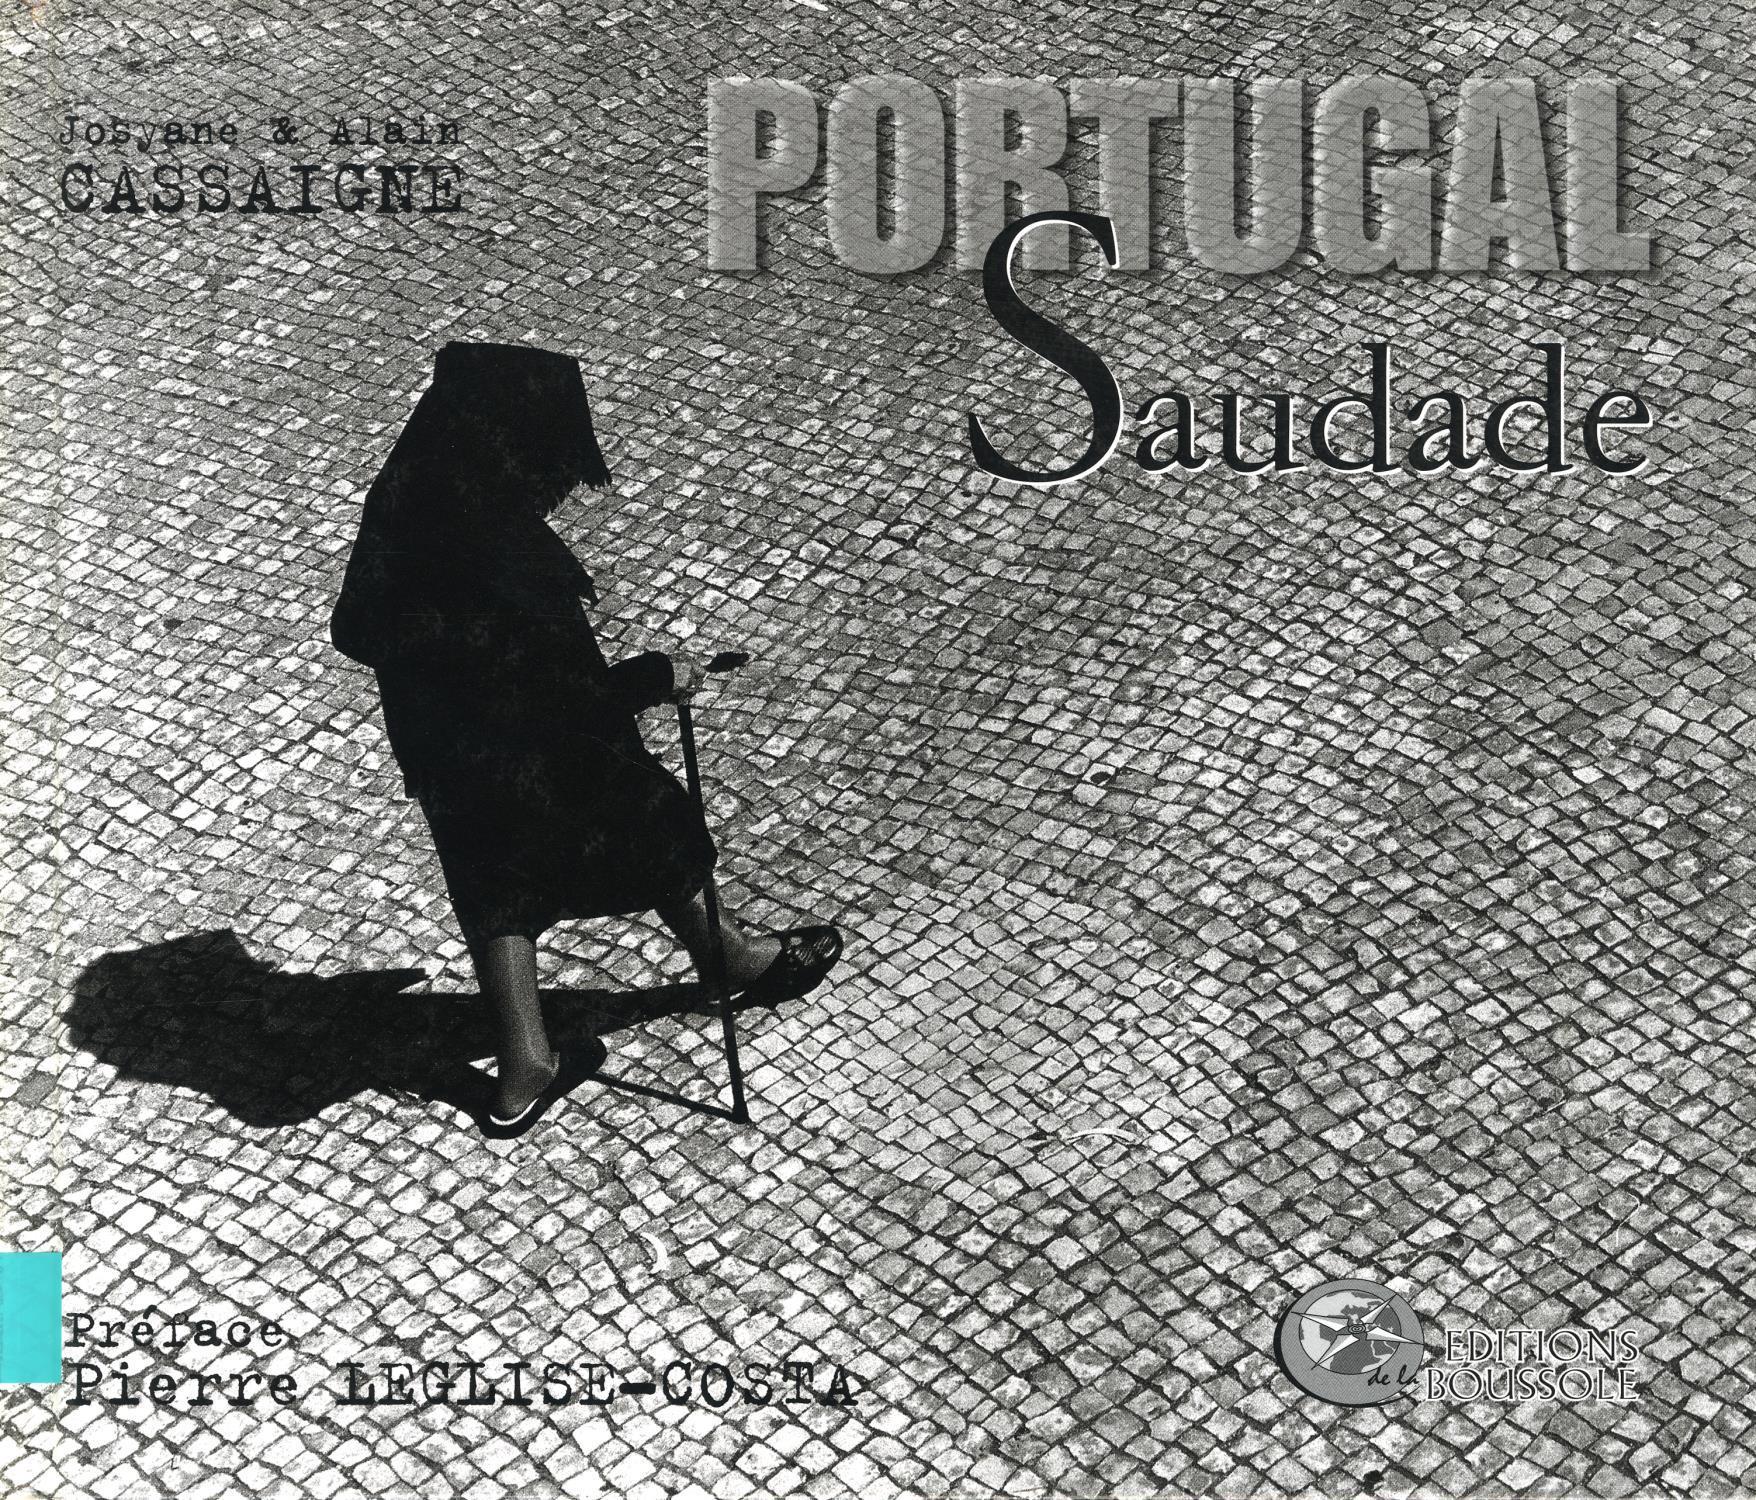 Portugal Saudade. Hommage à Jean Dieuzaide & Vieira da Silva